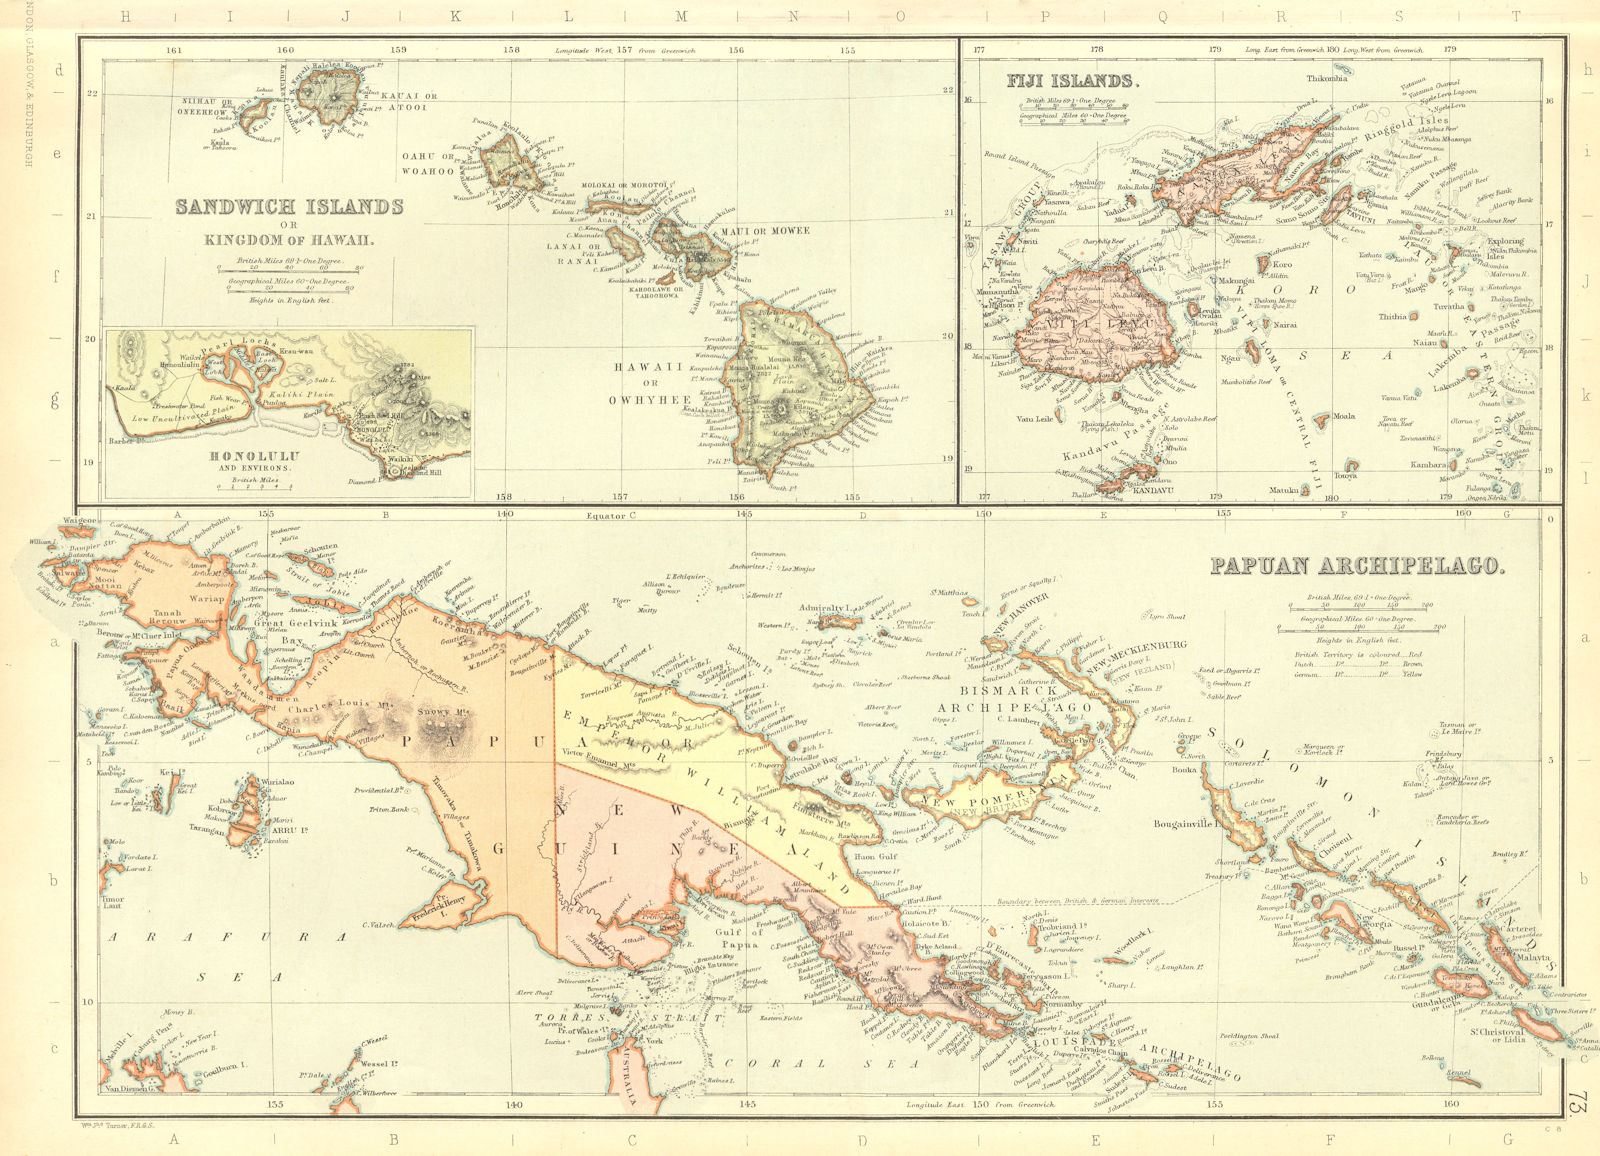 PAPUA NEW GUINEA. Kaiser-Wilhelmsland Irian Jaya Hawaii Fiji. BLACKIE 1893 map